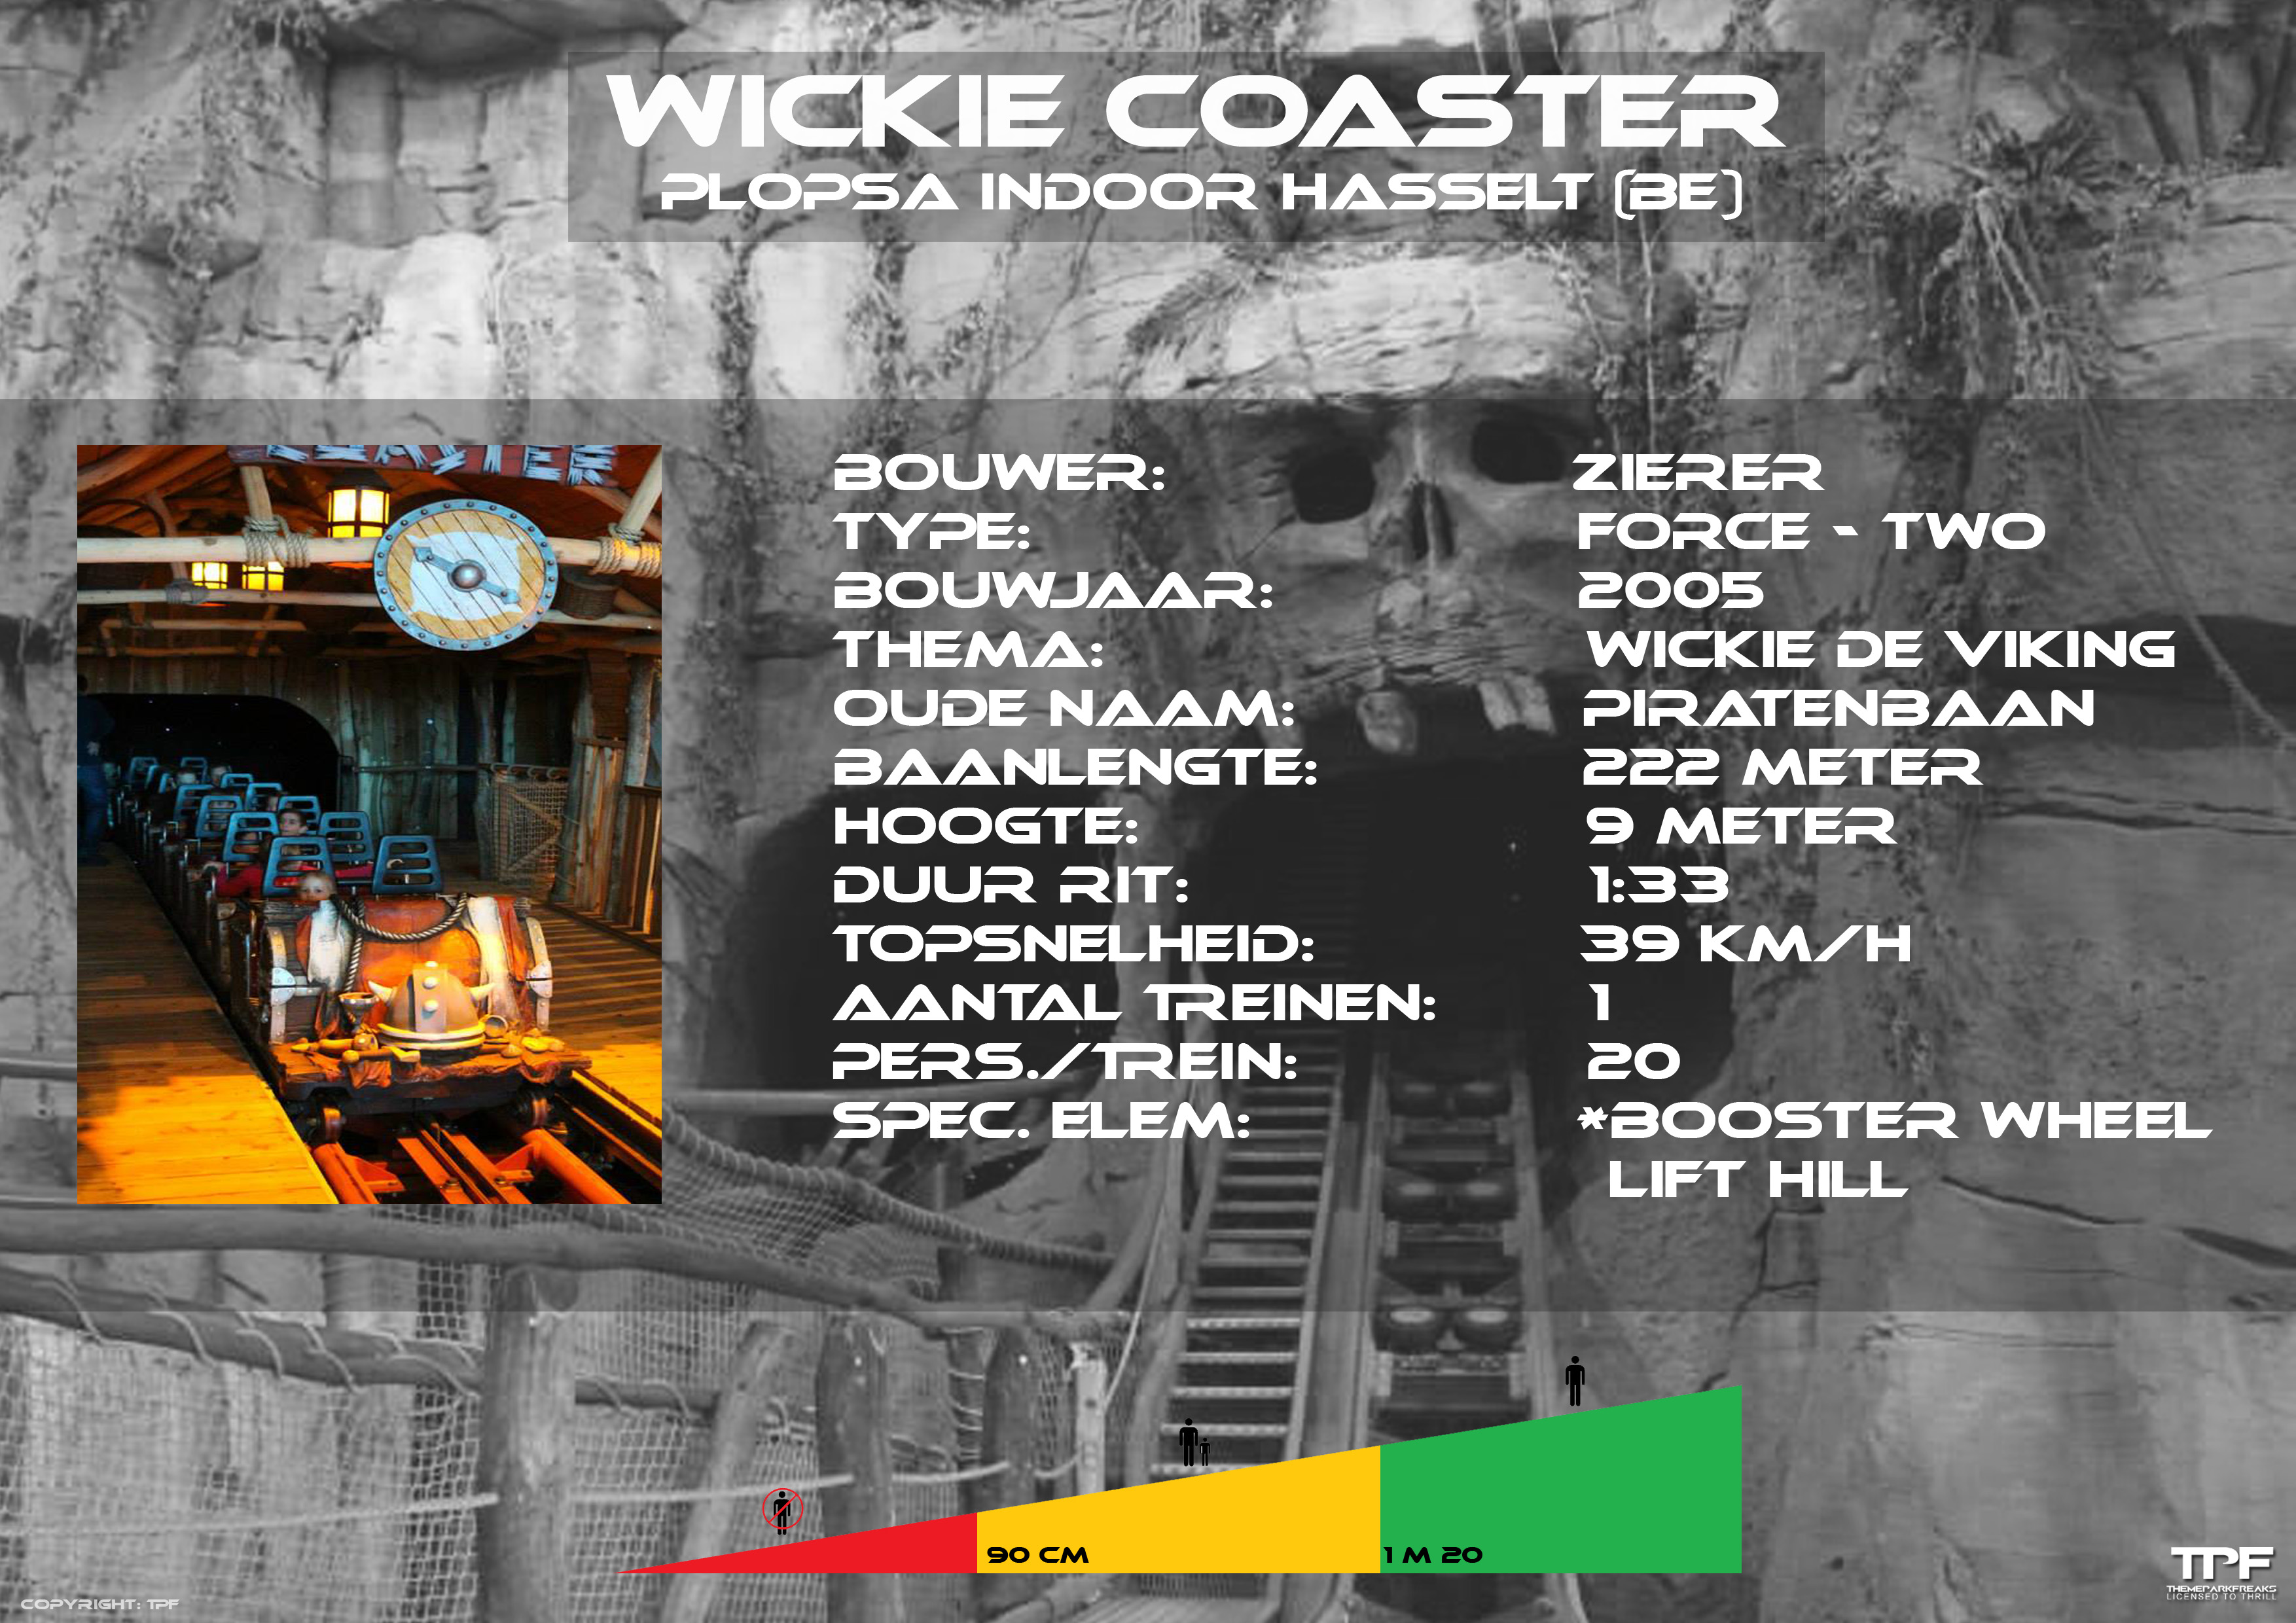 Wickie coaster copy